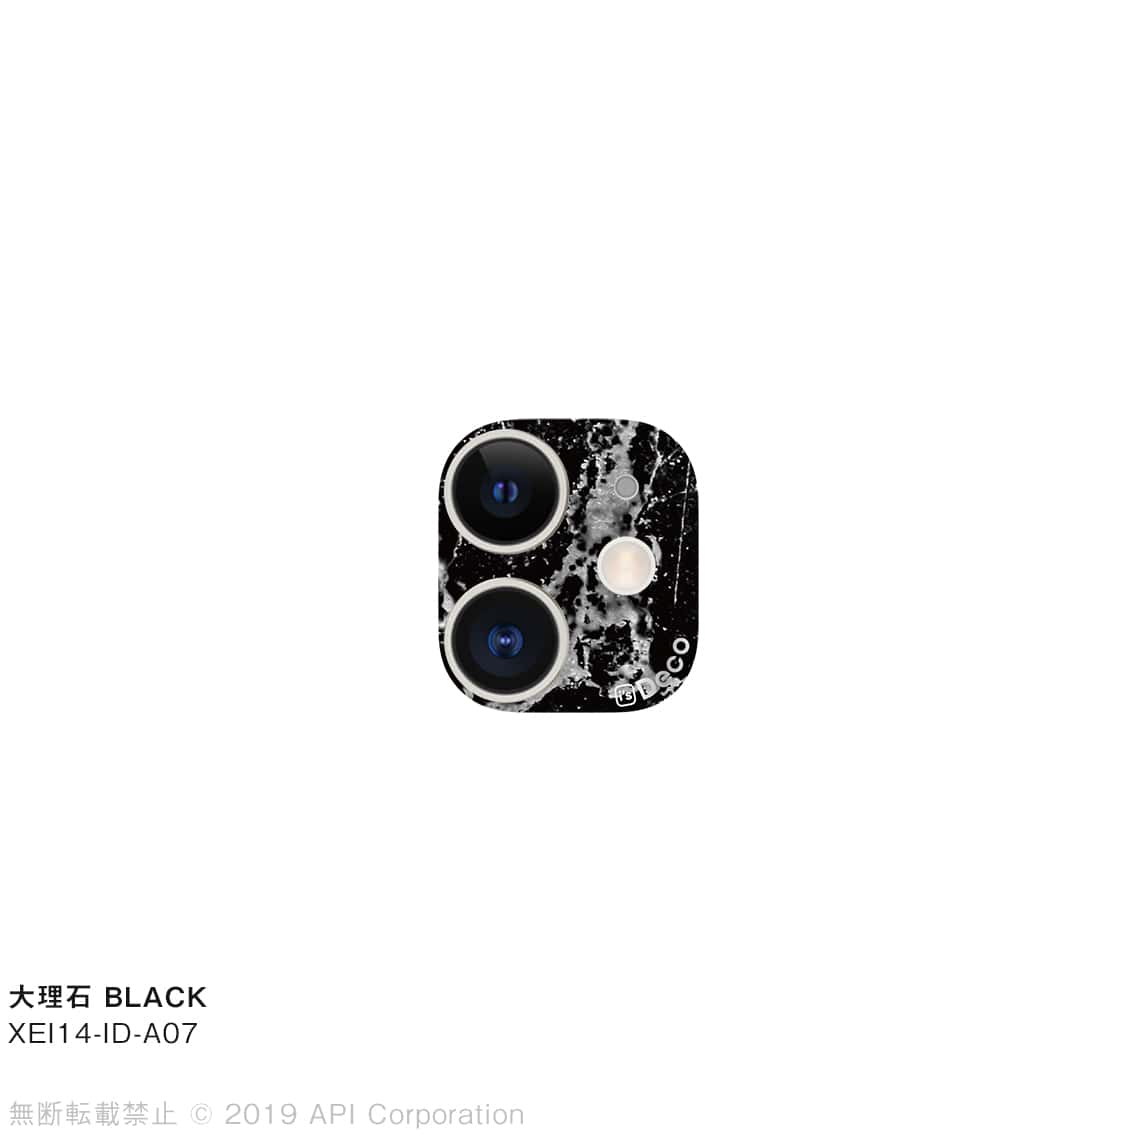 iPhone 11  i's Deco [PATTERN (A05-A08)］